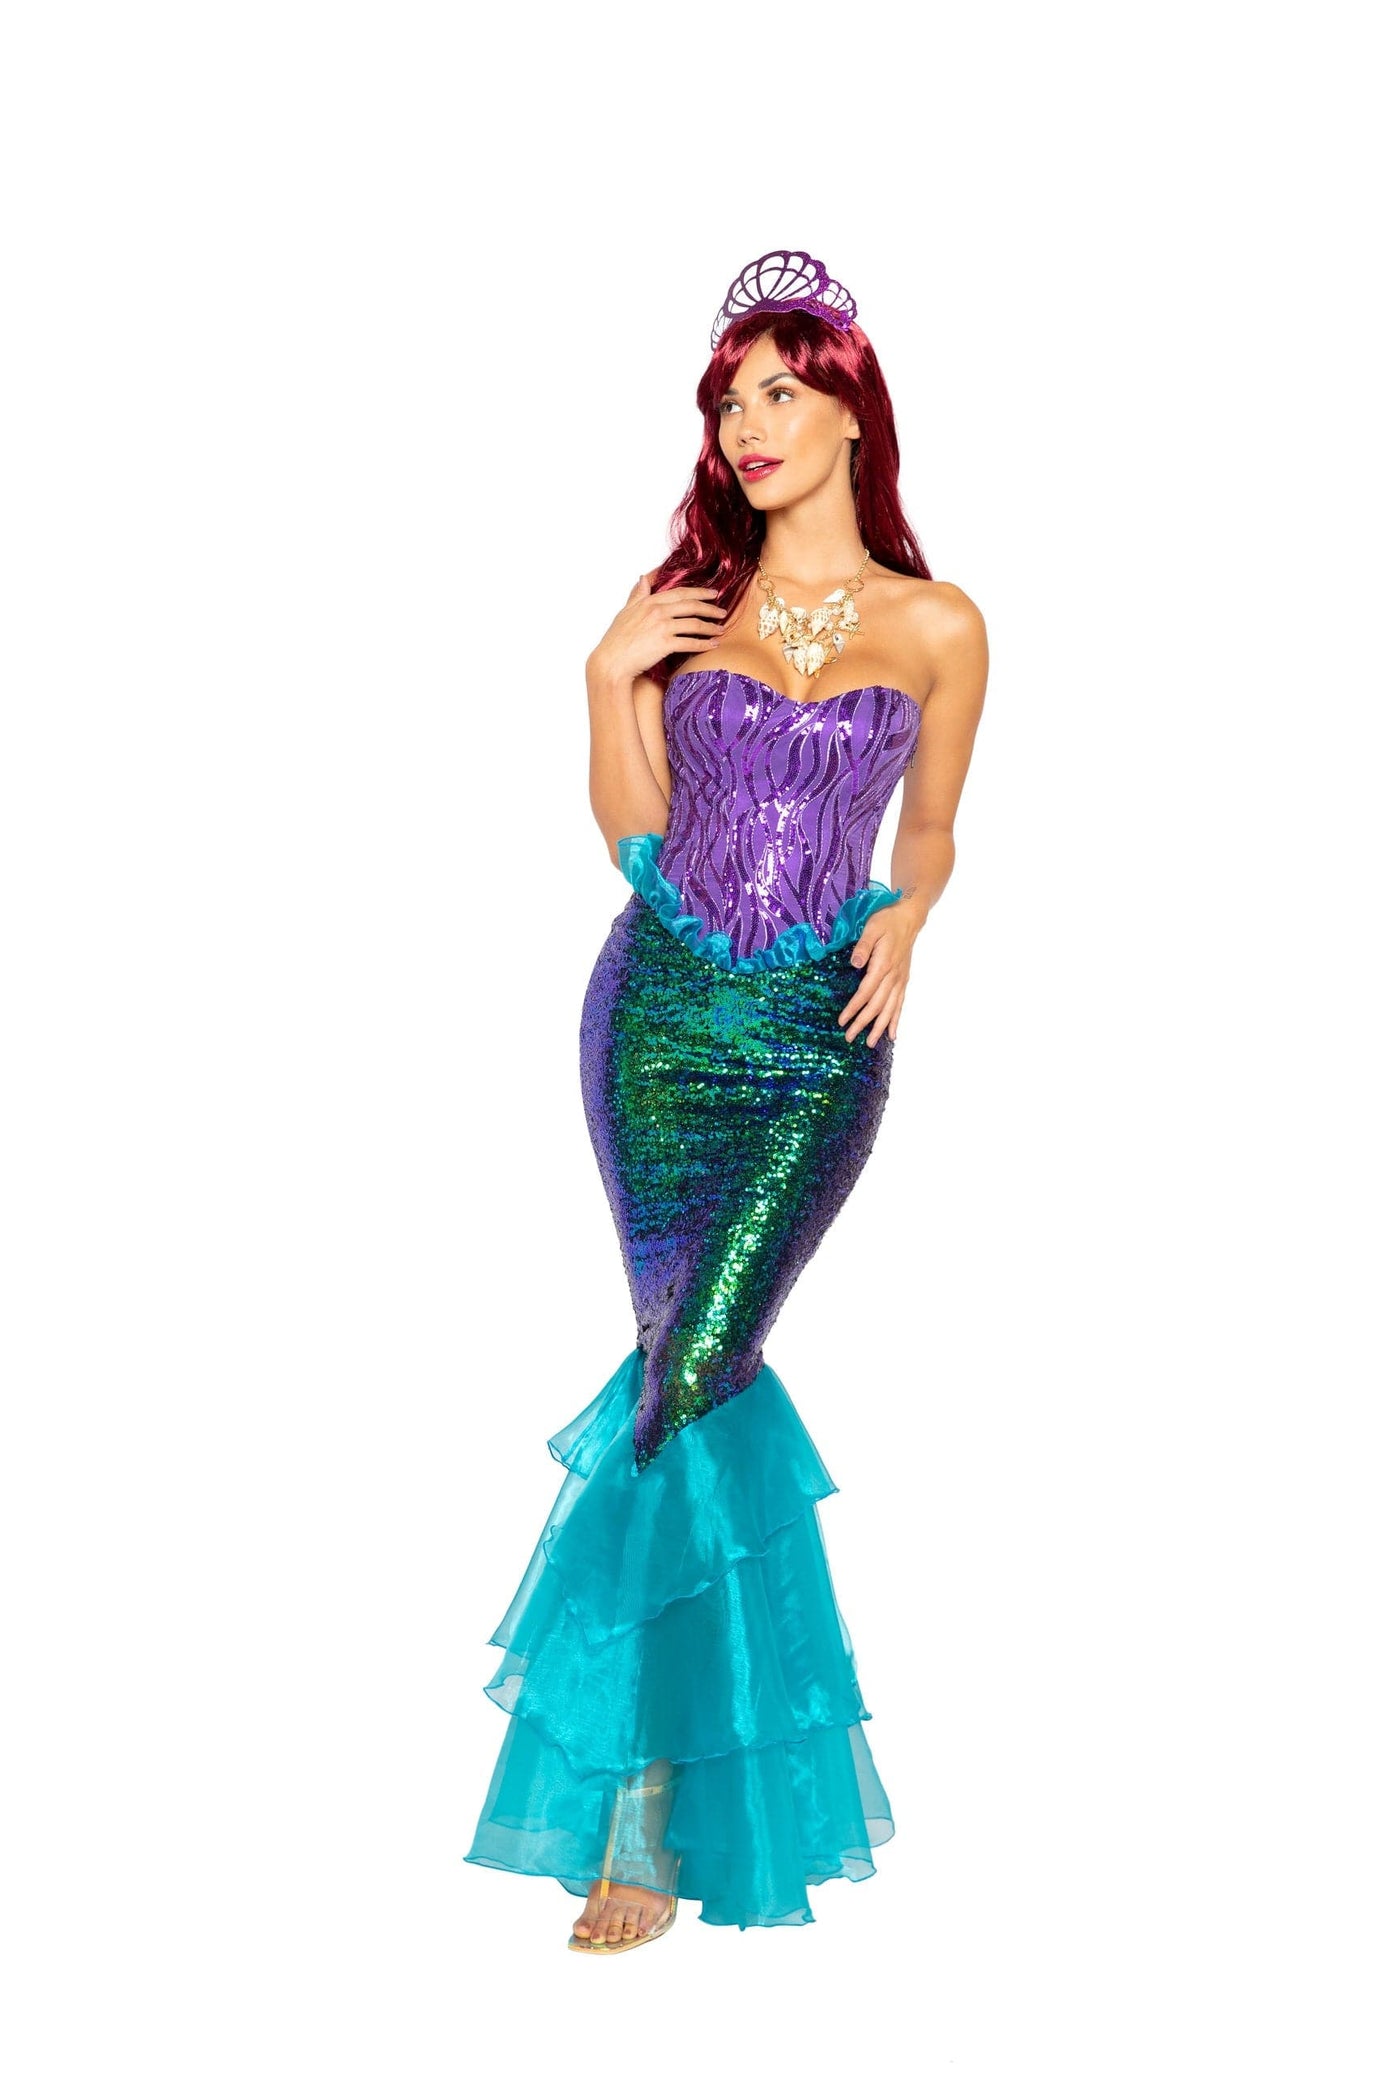 3pc. Majestic Mermaid Women's Costume - For Love of Lingerie